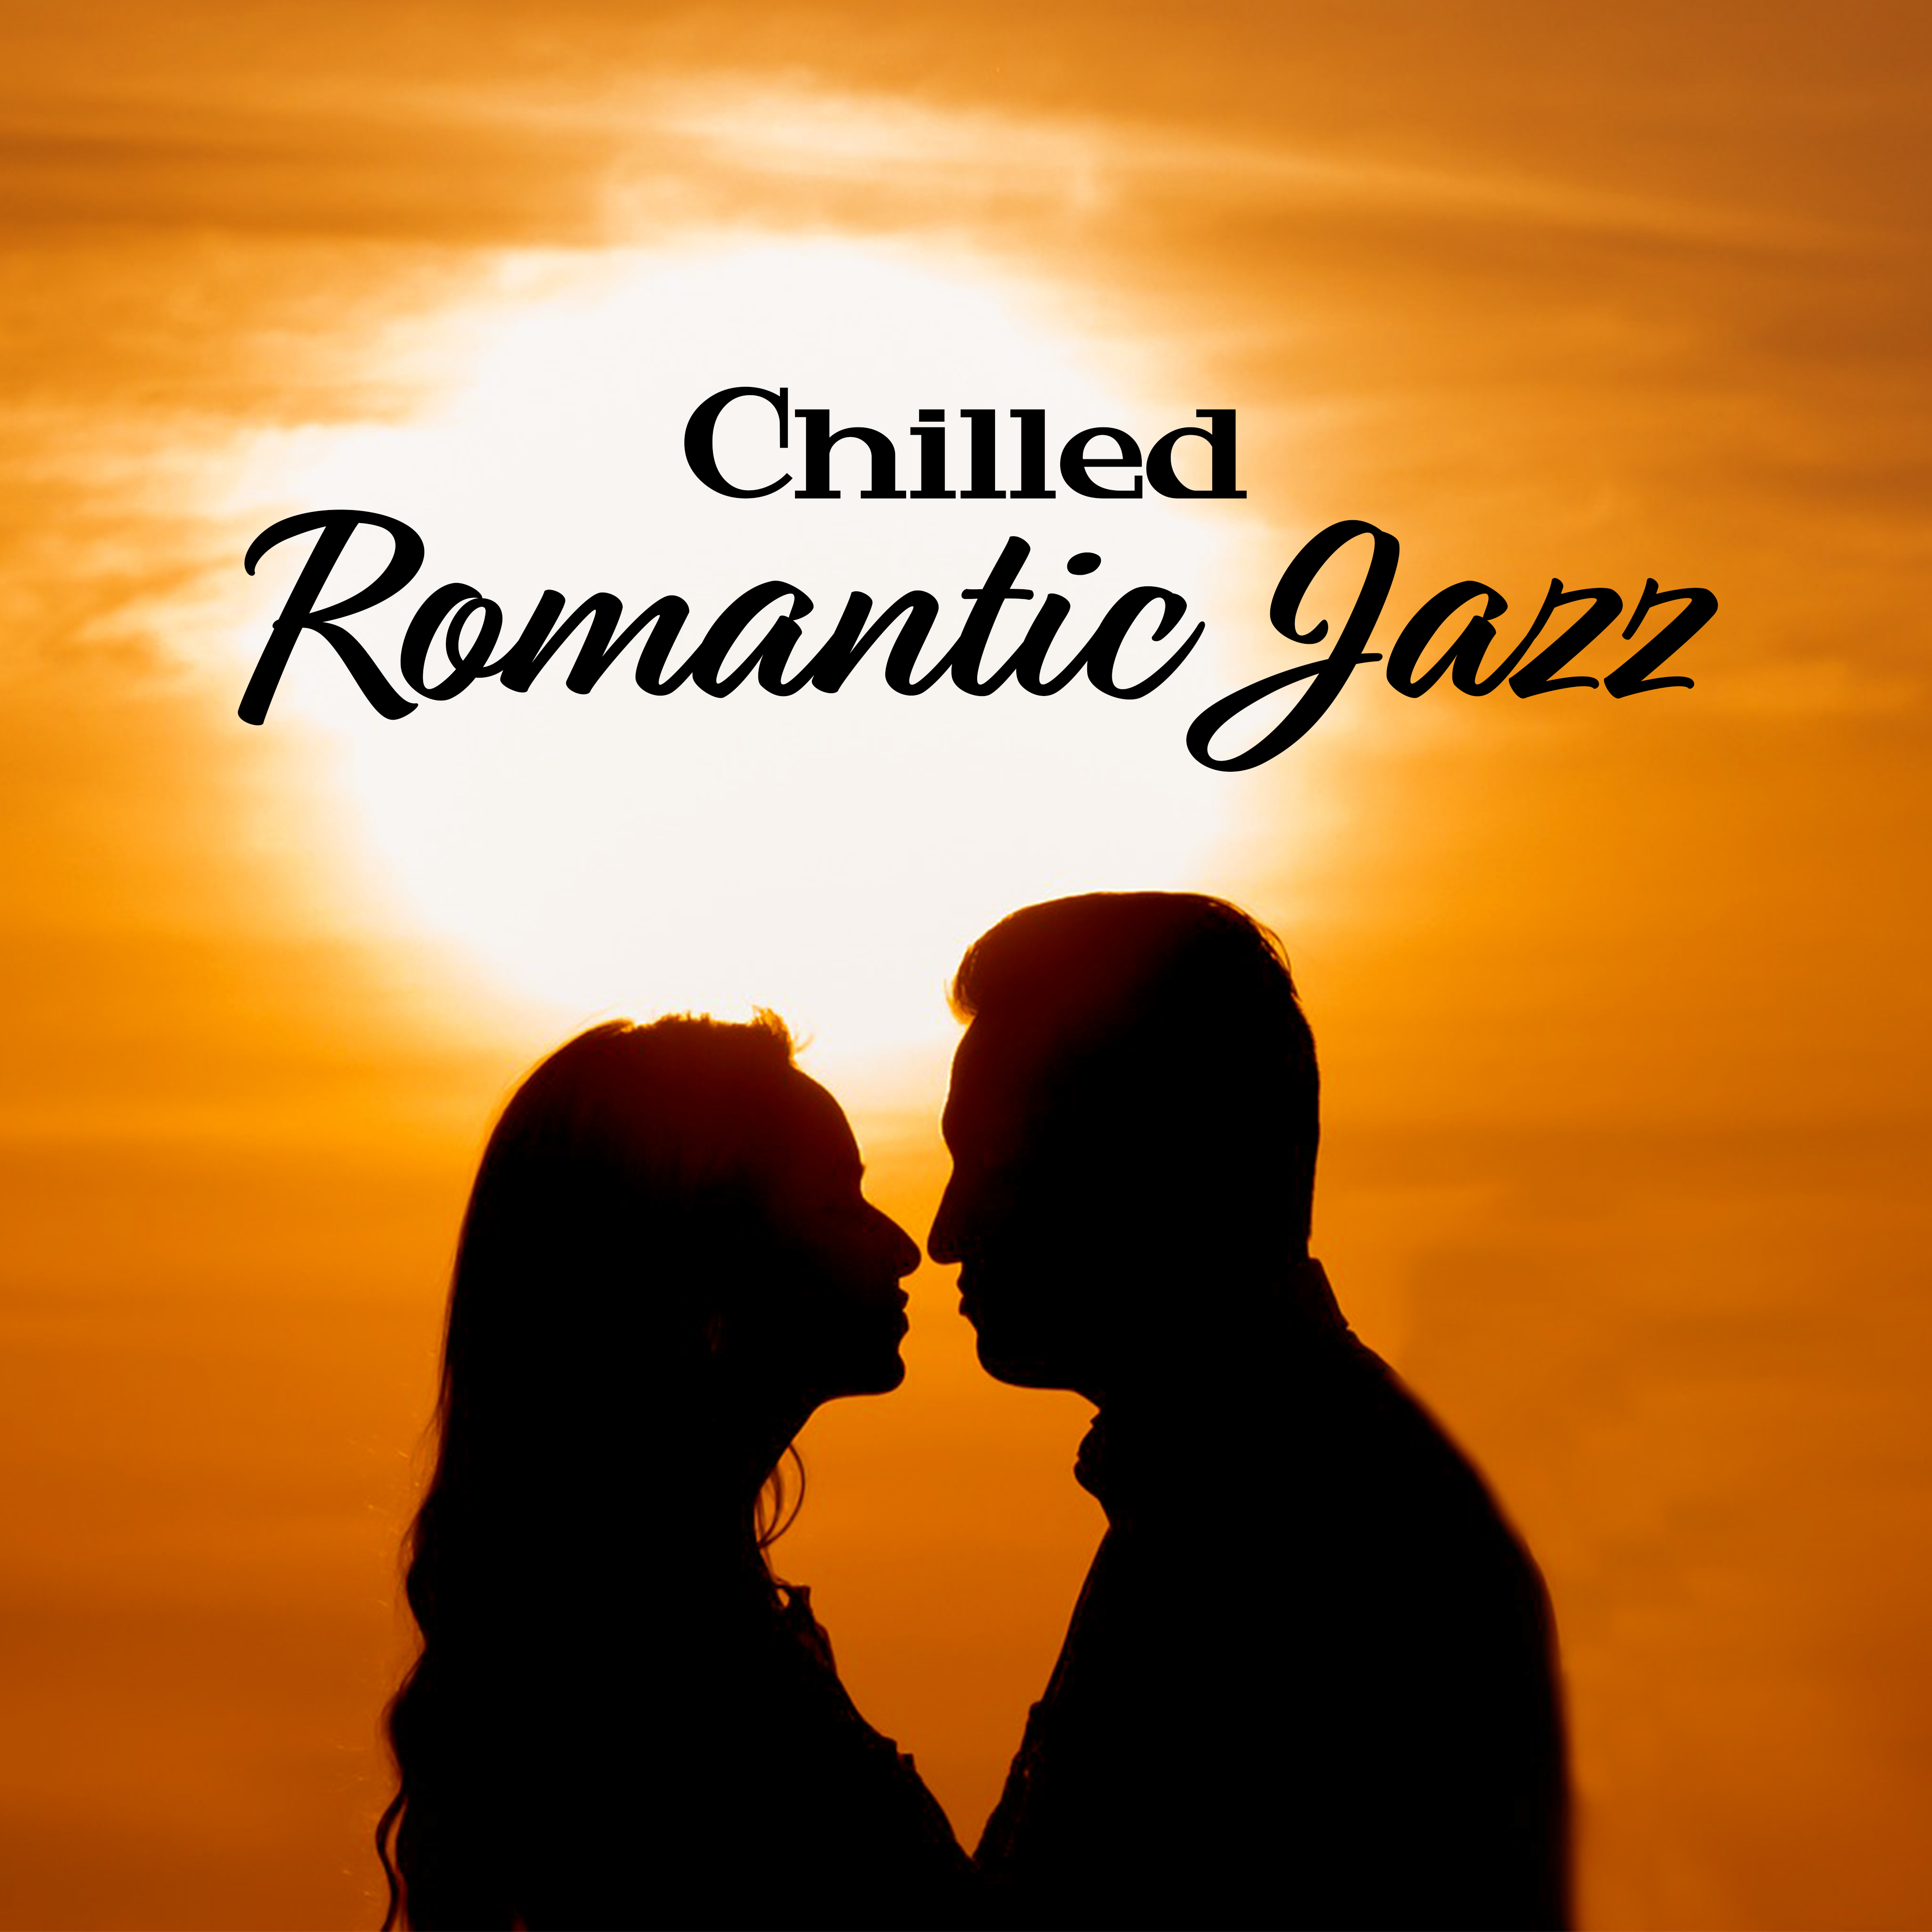 Chilled Romantic Jazz